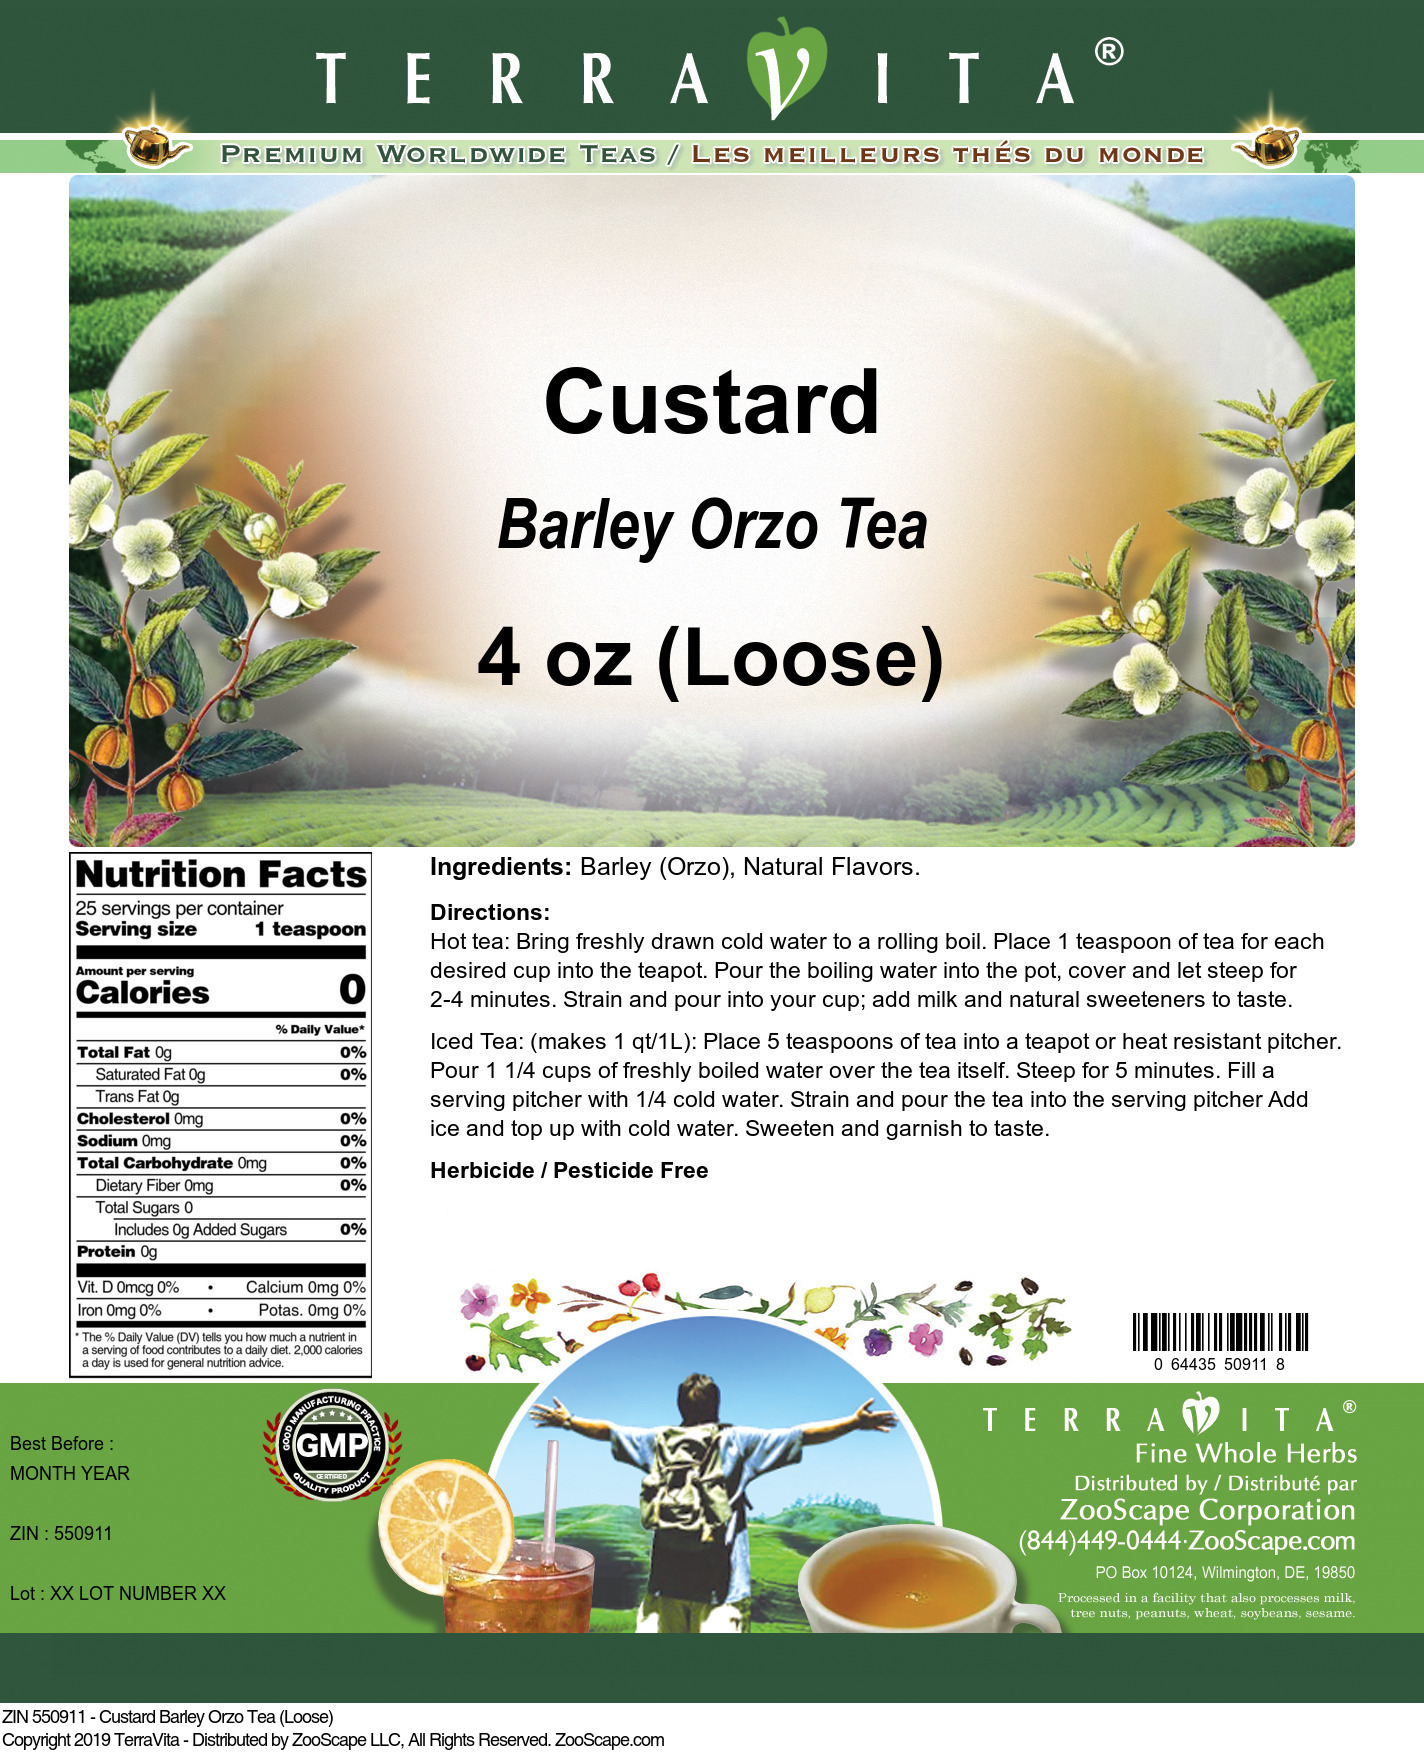 Custard Barley Orzo Tea (Loose) - Label